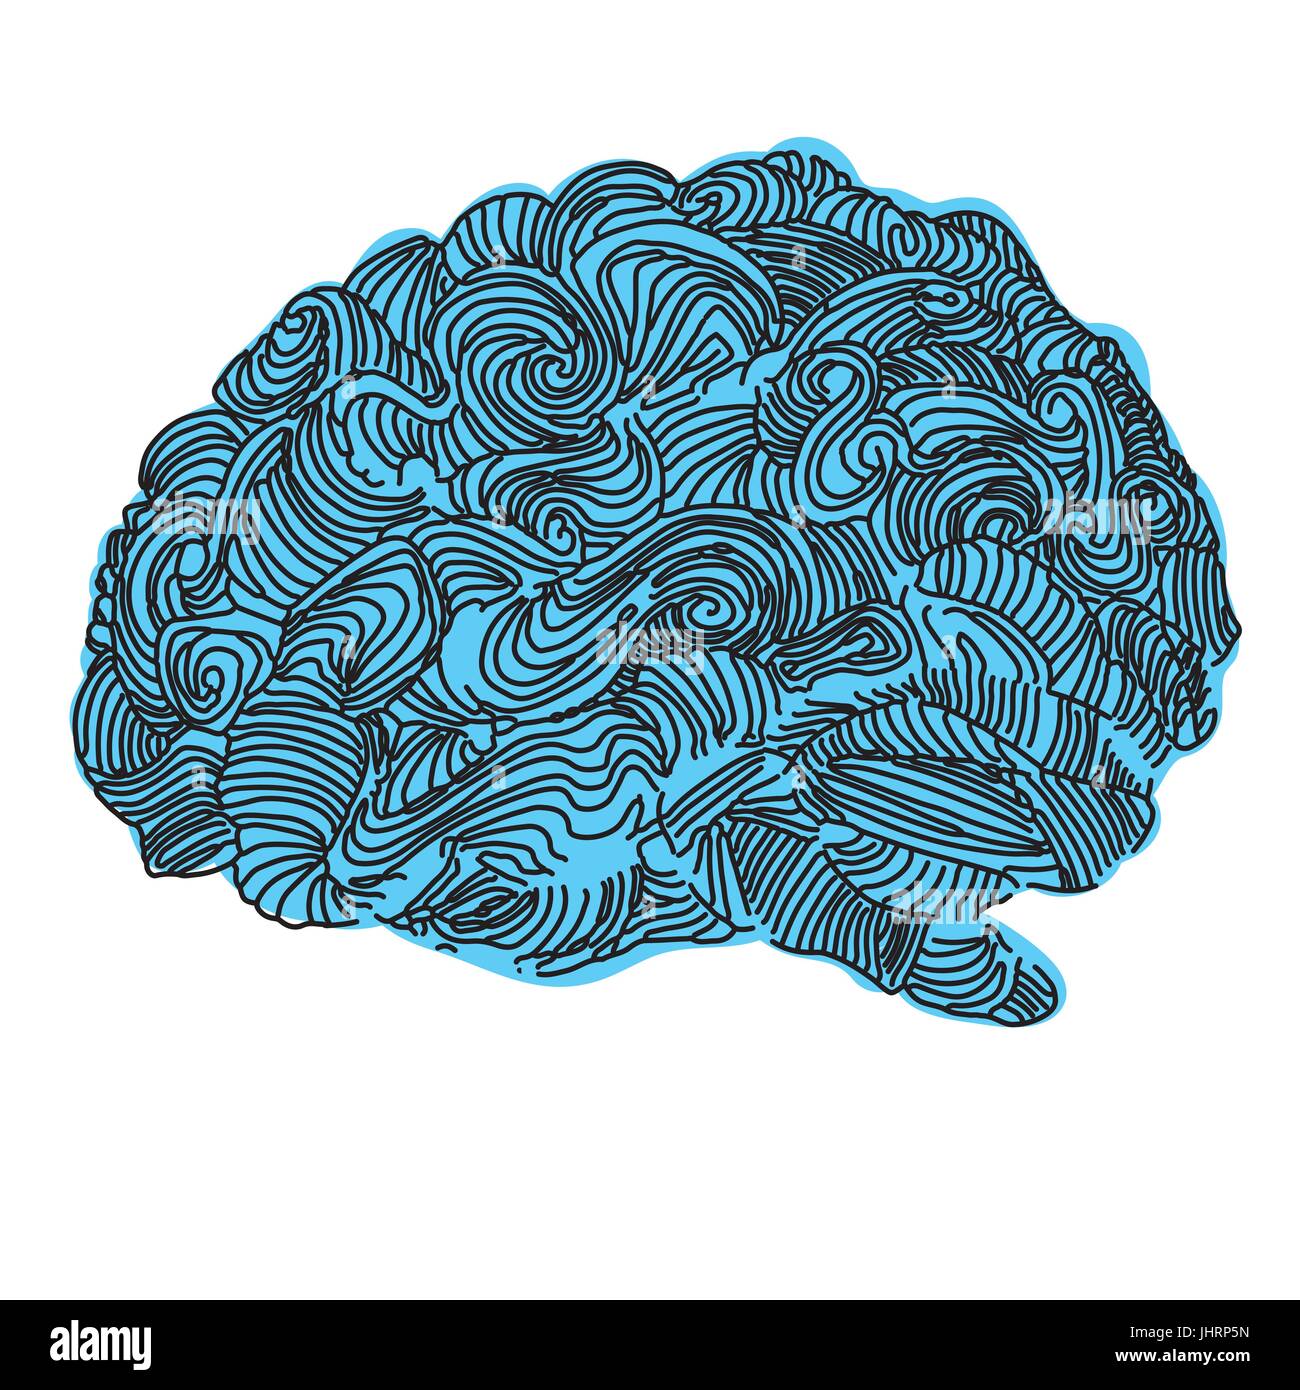 Gehirn Idee Illustration. Doodle-Vektor-Konzept über menschliche Gehirn. Kreative illustration Stock Vektor